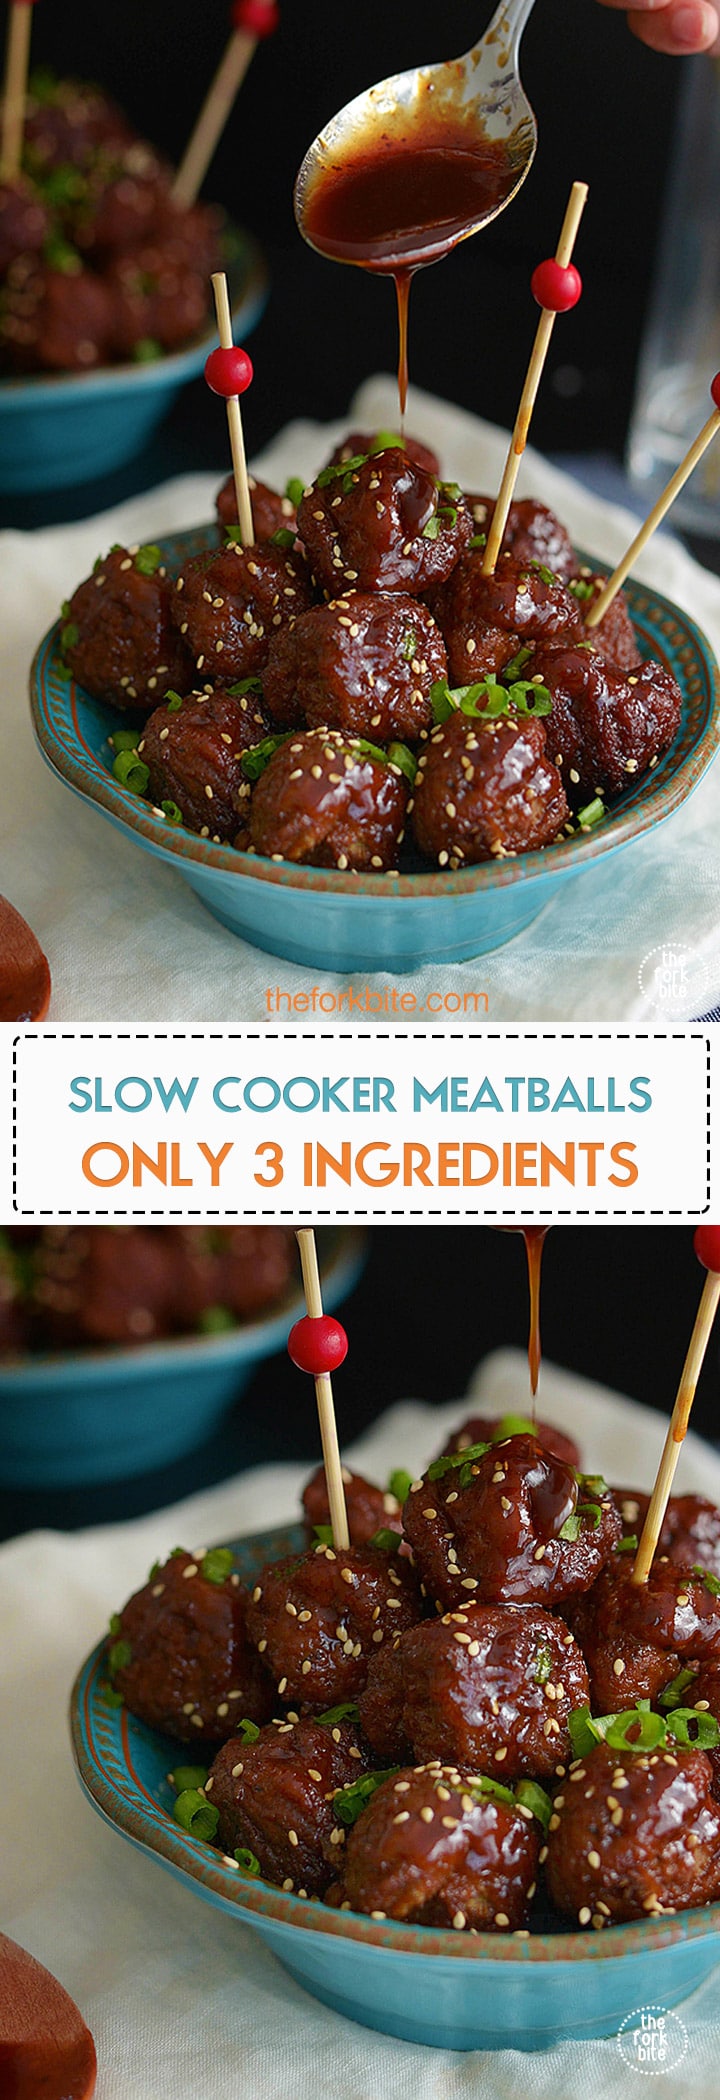 Slow cooker meatballs - Only 3 Ingredients